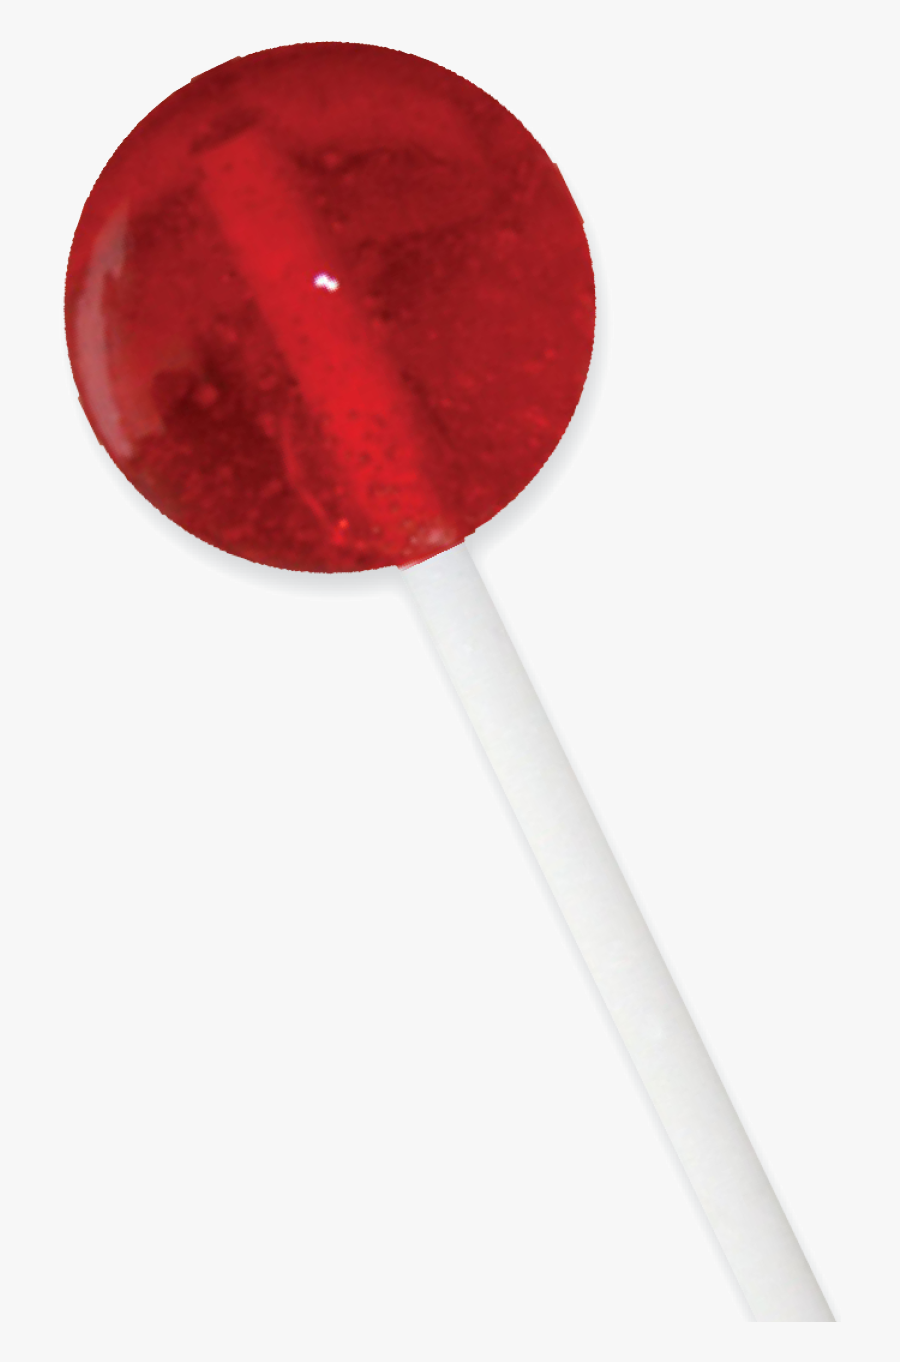 Clip Art Free Stock Holds Bags Ingredients Sugar Corn - Cherry Lollipop Transparent, Transparent Clipart